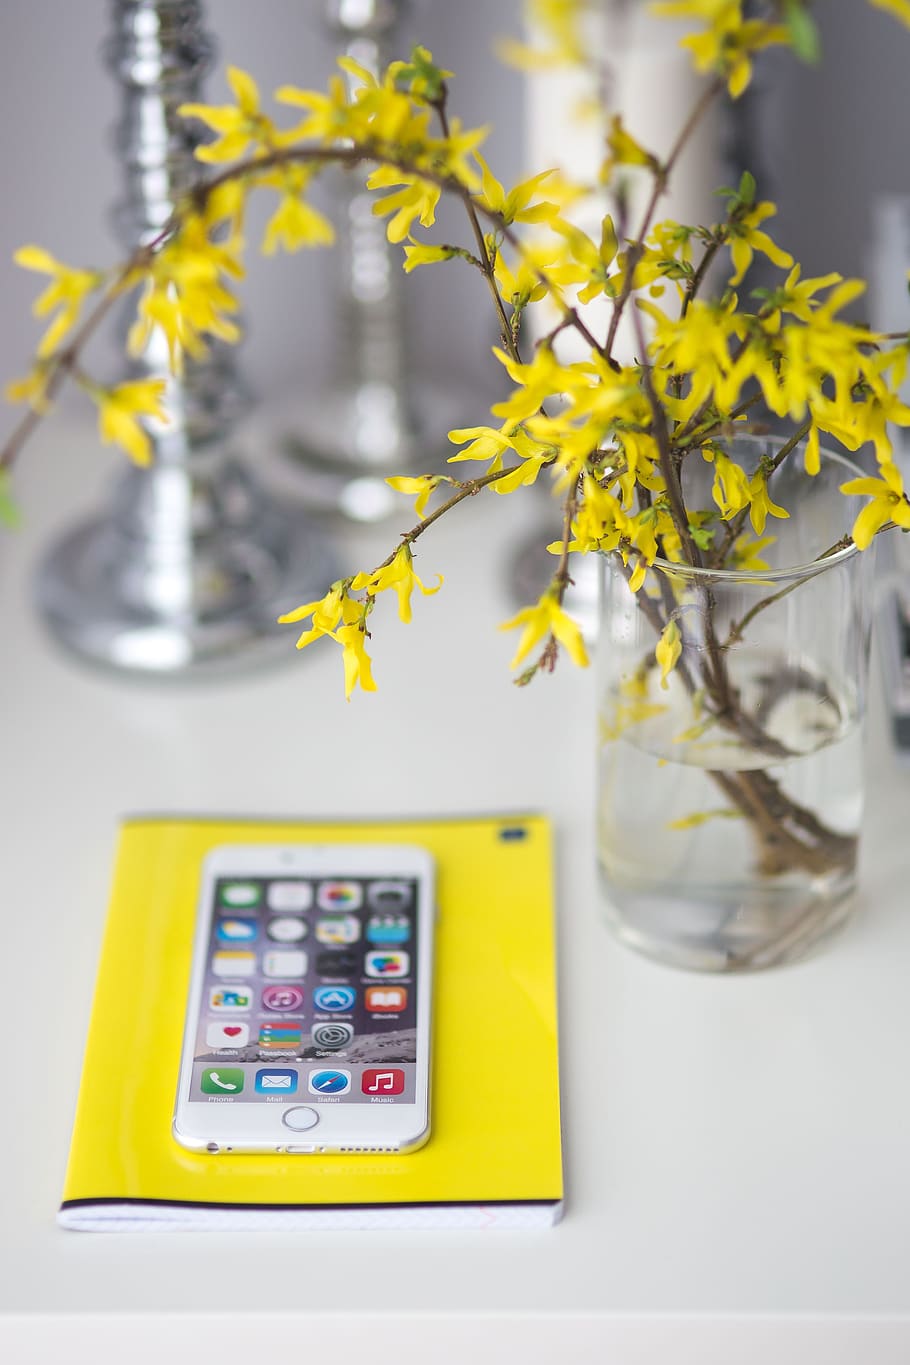 flores, amarelo, caderno, smartphone, telefone celular, bloco de notas, branco, flor, planta, tecnologia